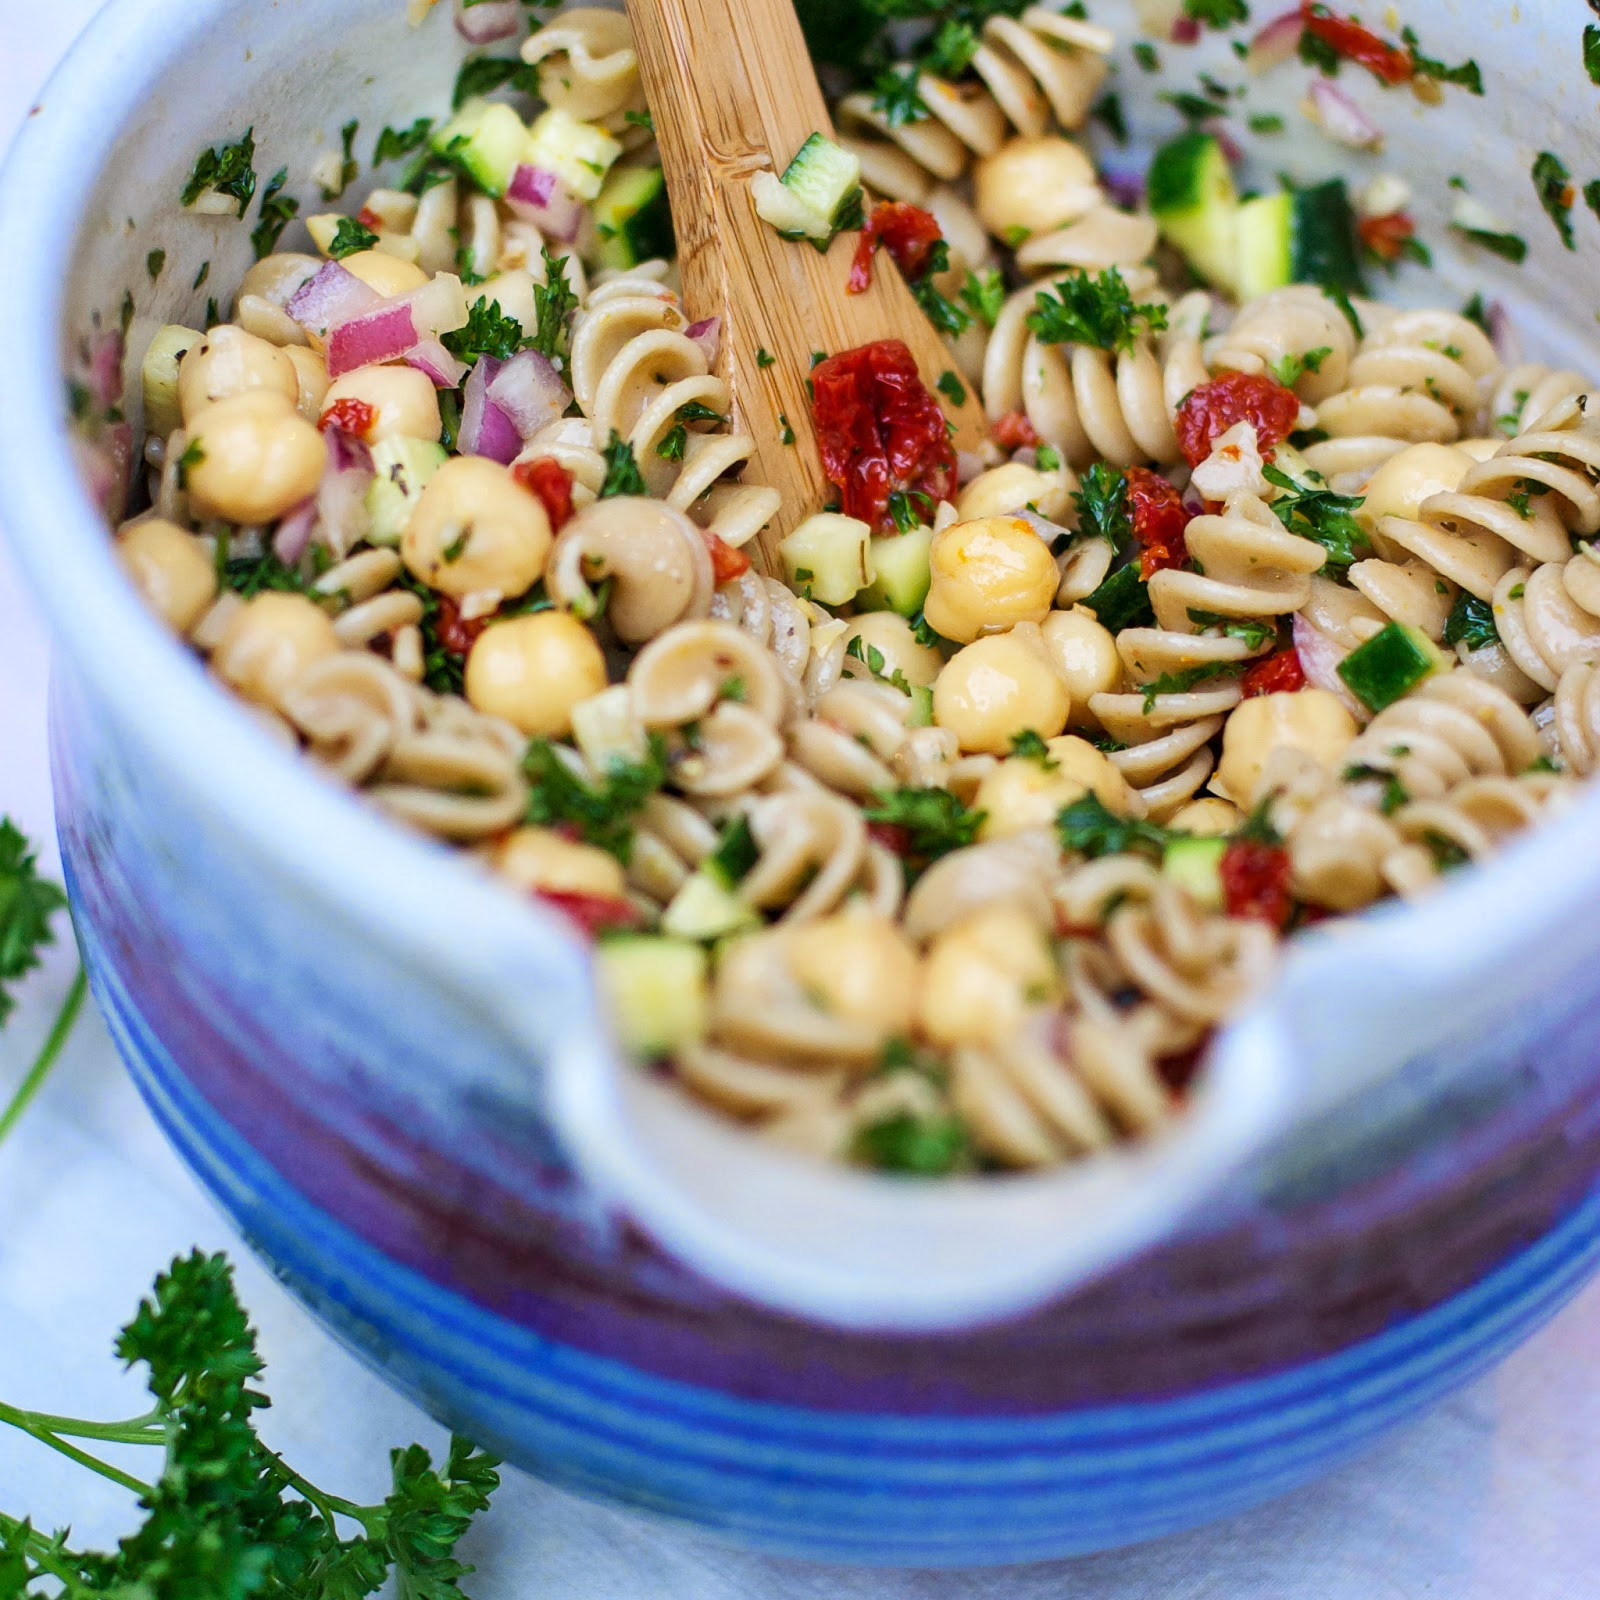 Vegetarian Pasta Salad With Beans
 Tuscan Bean and Pasta Salad